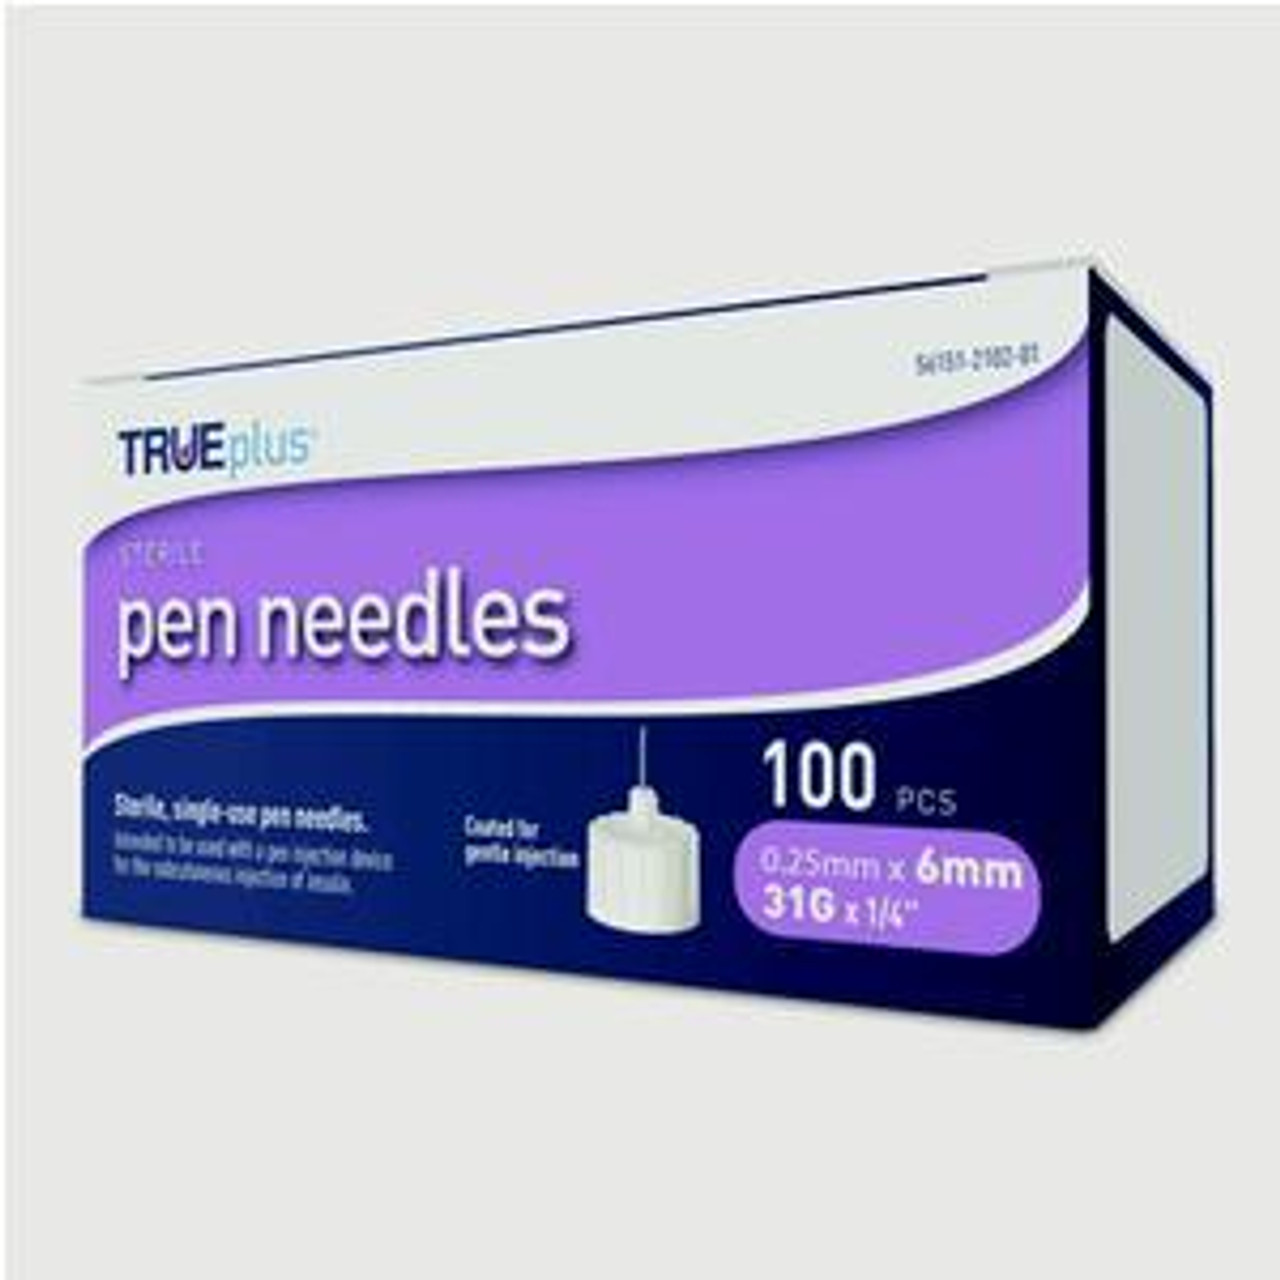 New TRUEPLUS 56151-2113-01 TruePlus Pen Needles 31g, 8mm, 100ct Disposables  - General For Sale - DOTmed Listing #4615244